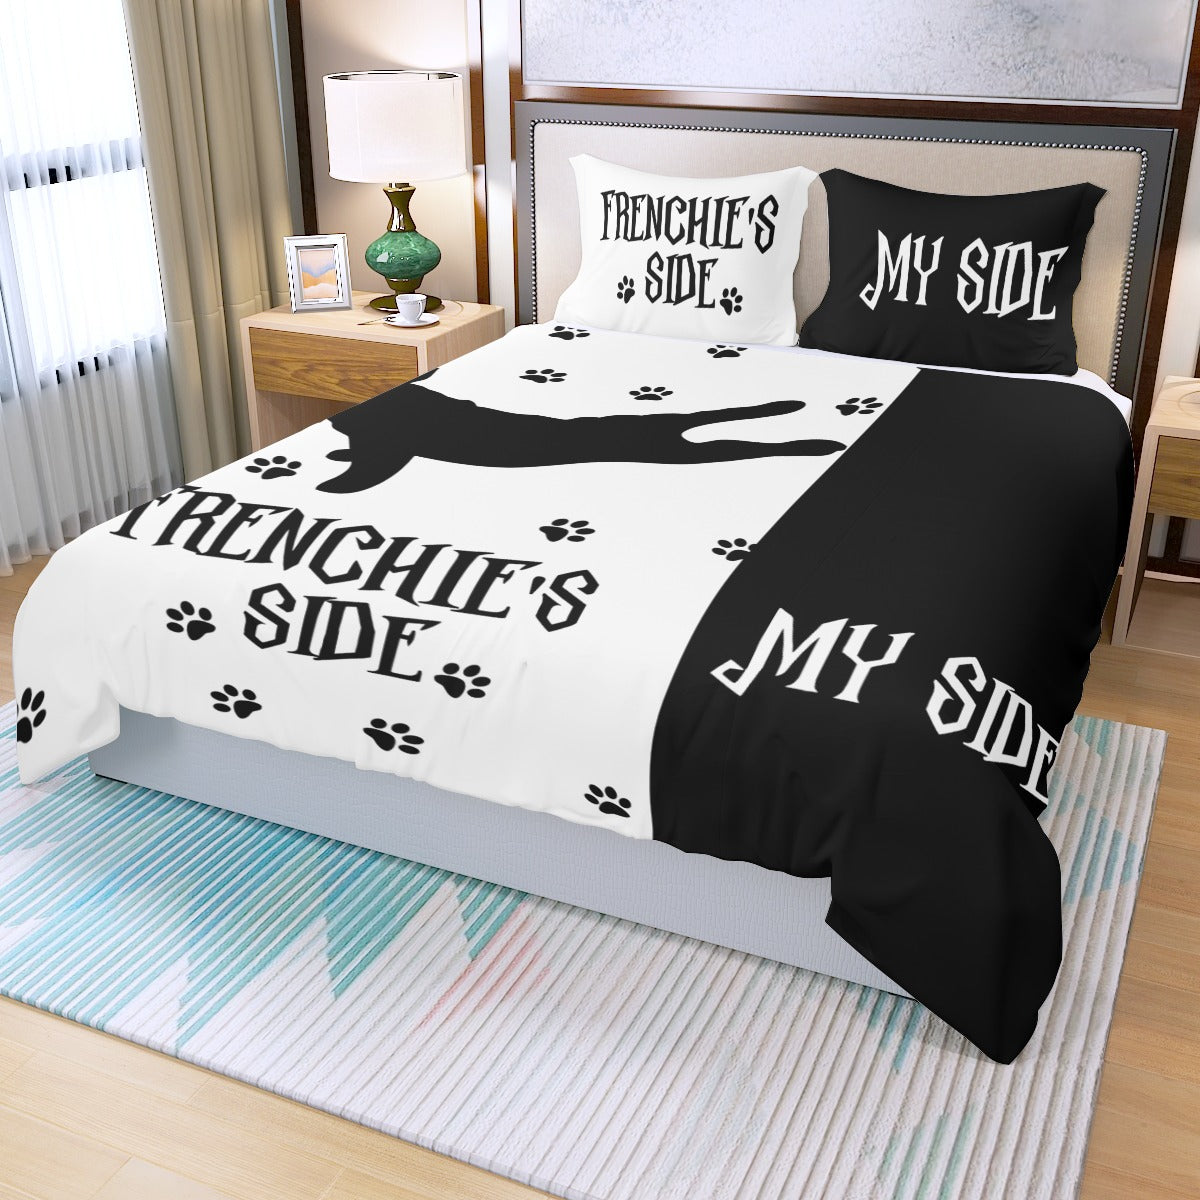 Frenchie's Side - Bedding set